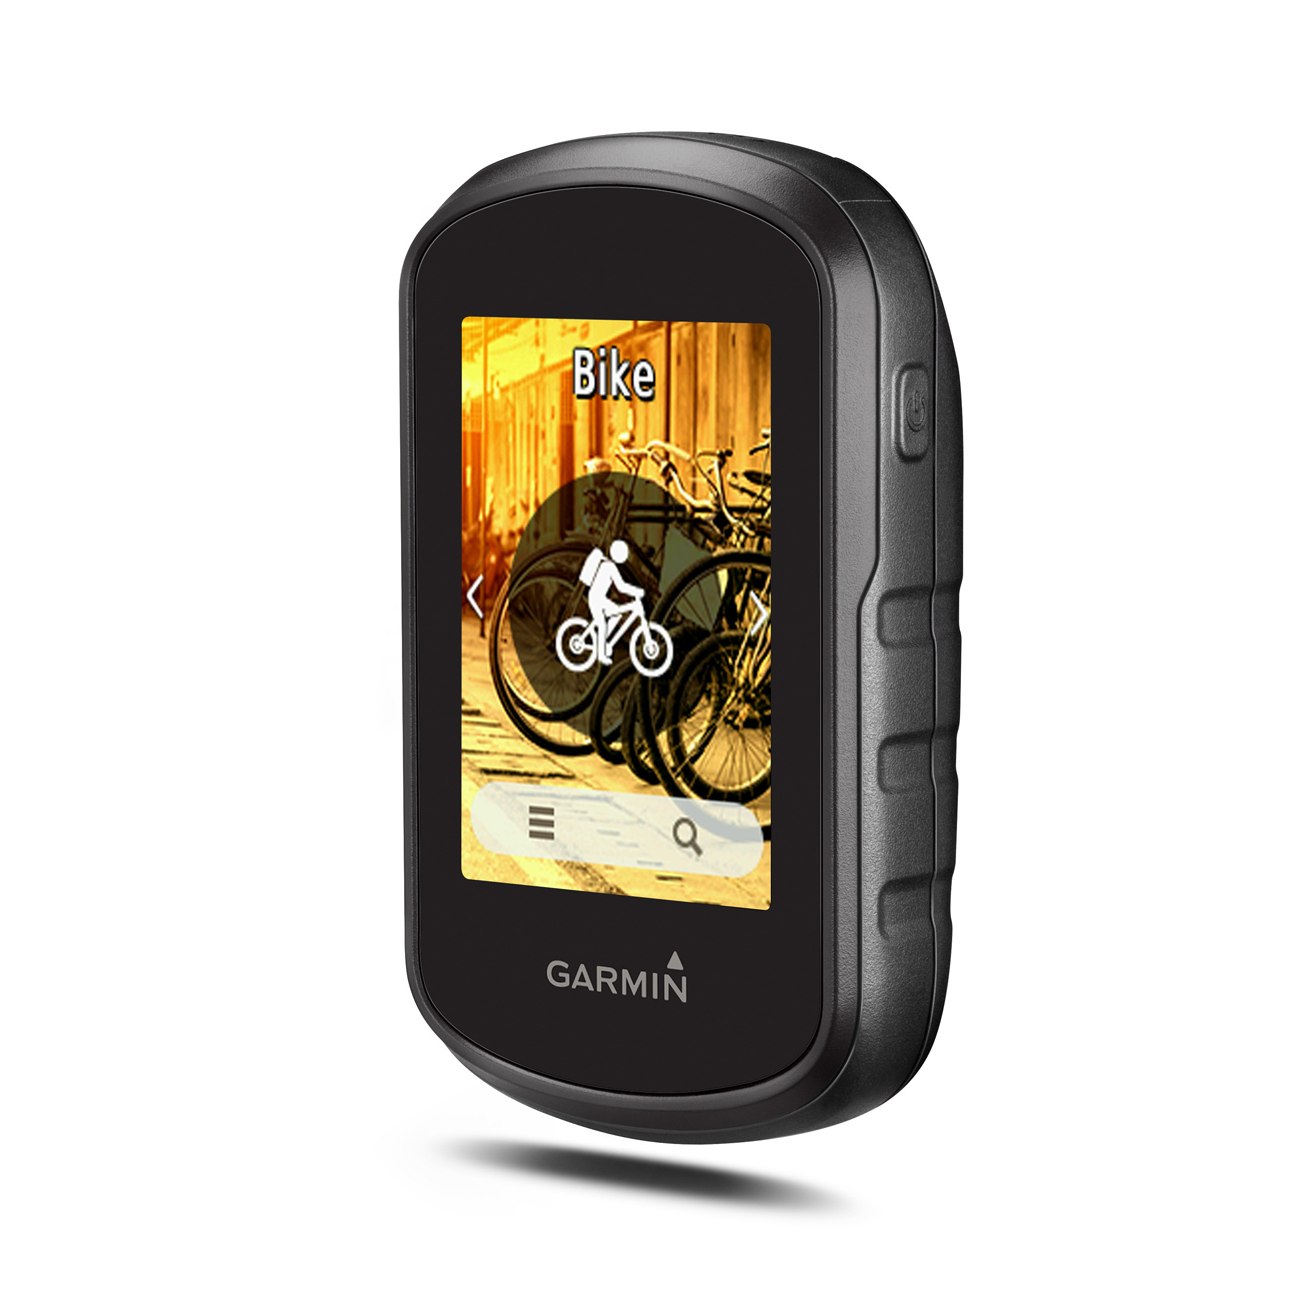 Garmin eTrex Touch 35 Handheld Device + Topo Active Europe Map - - grey/black